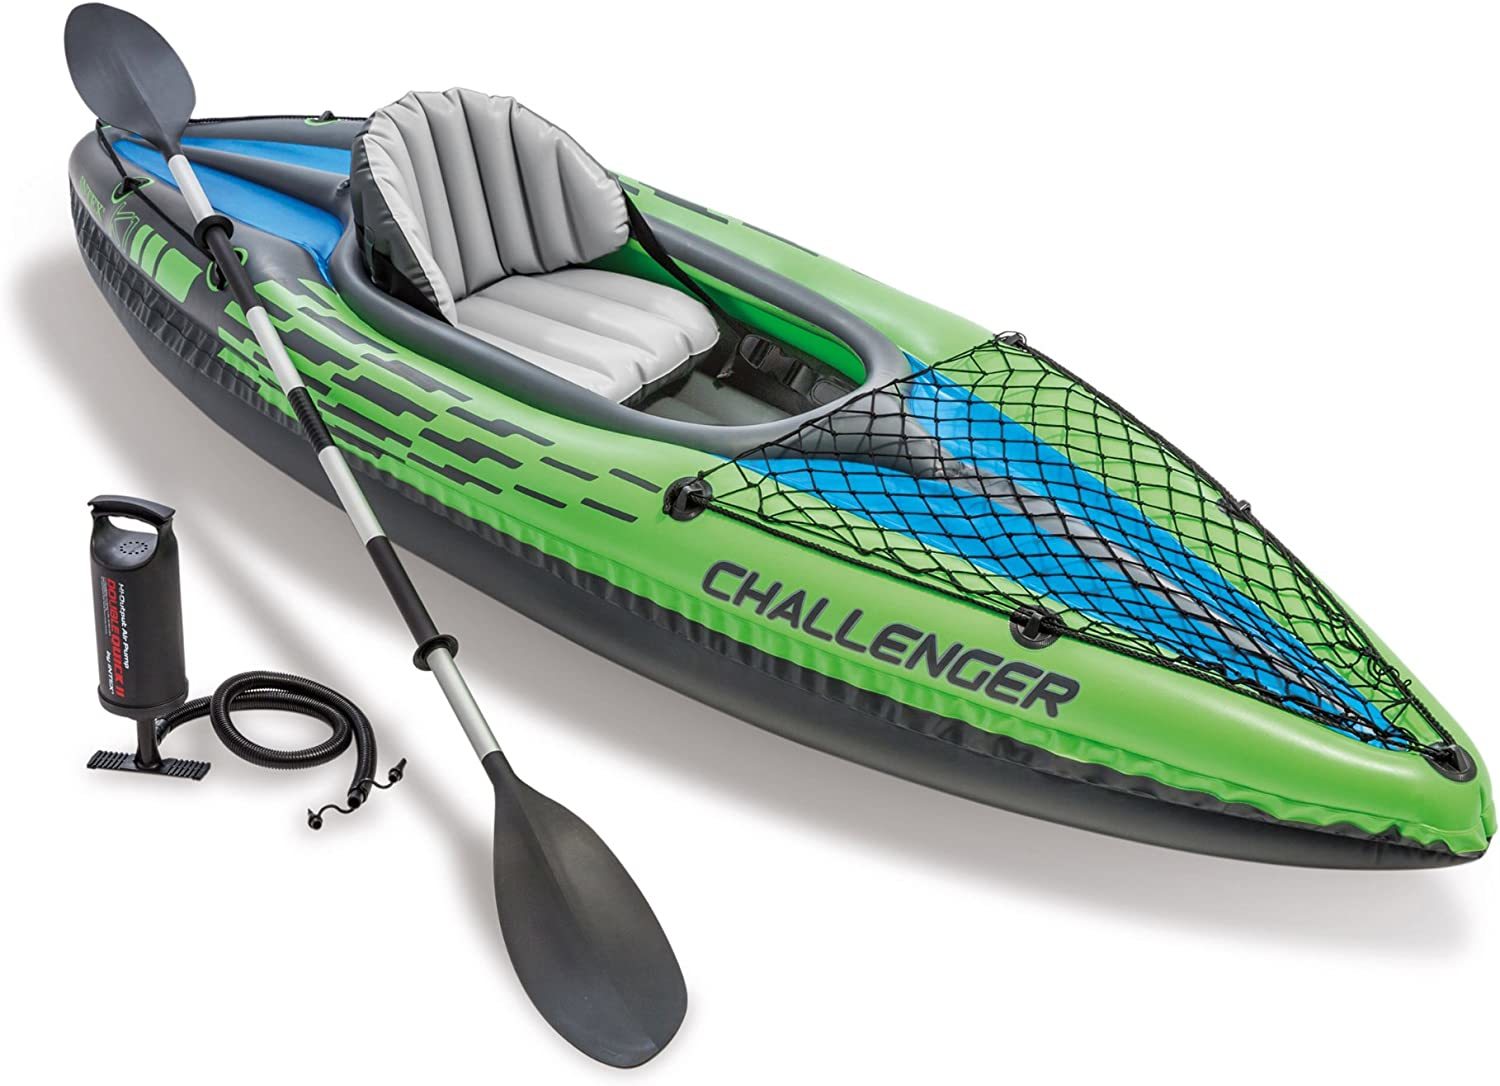 Intex Challenger Kayak, Inflatable Kayak Set With Aluminum Oars And High, Pump - $114.99